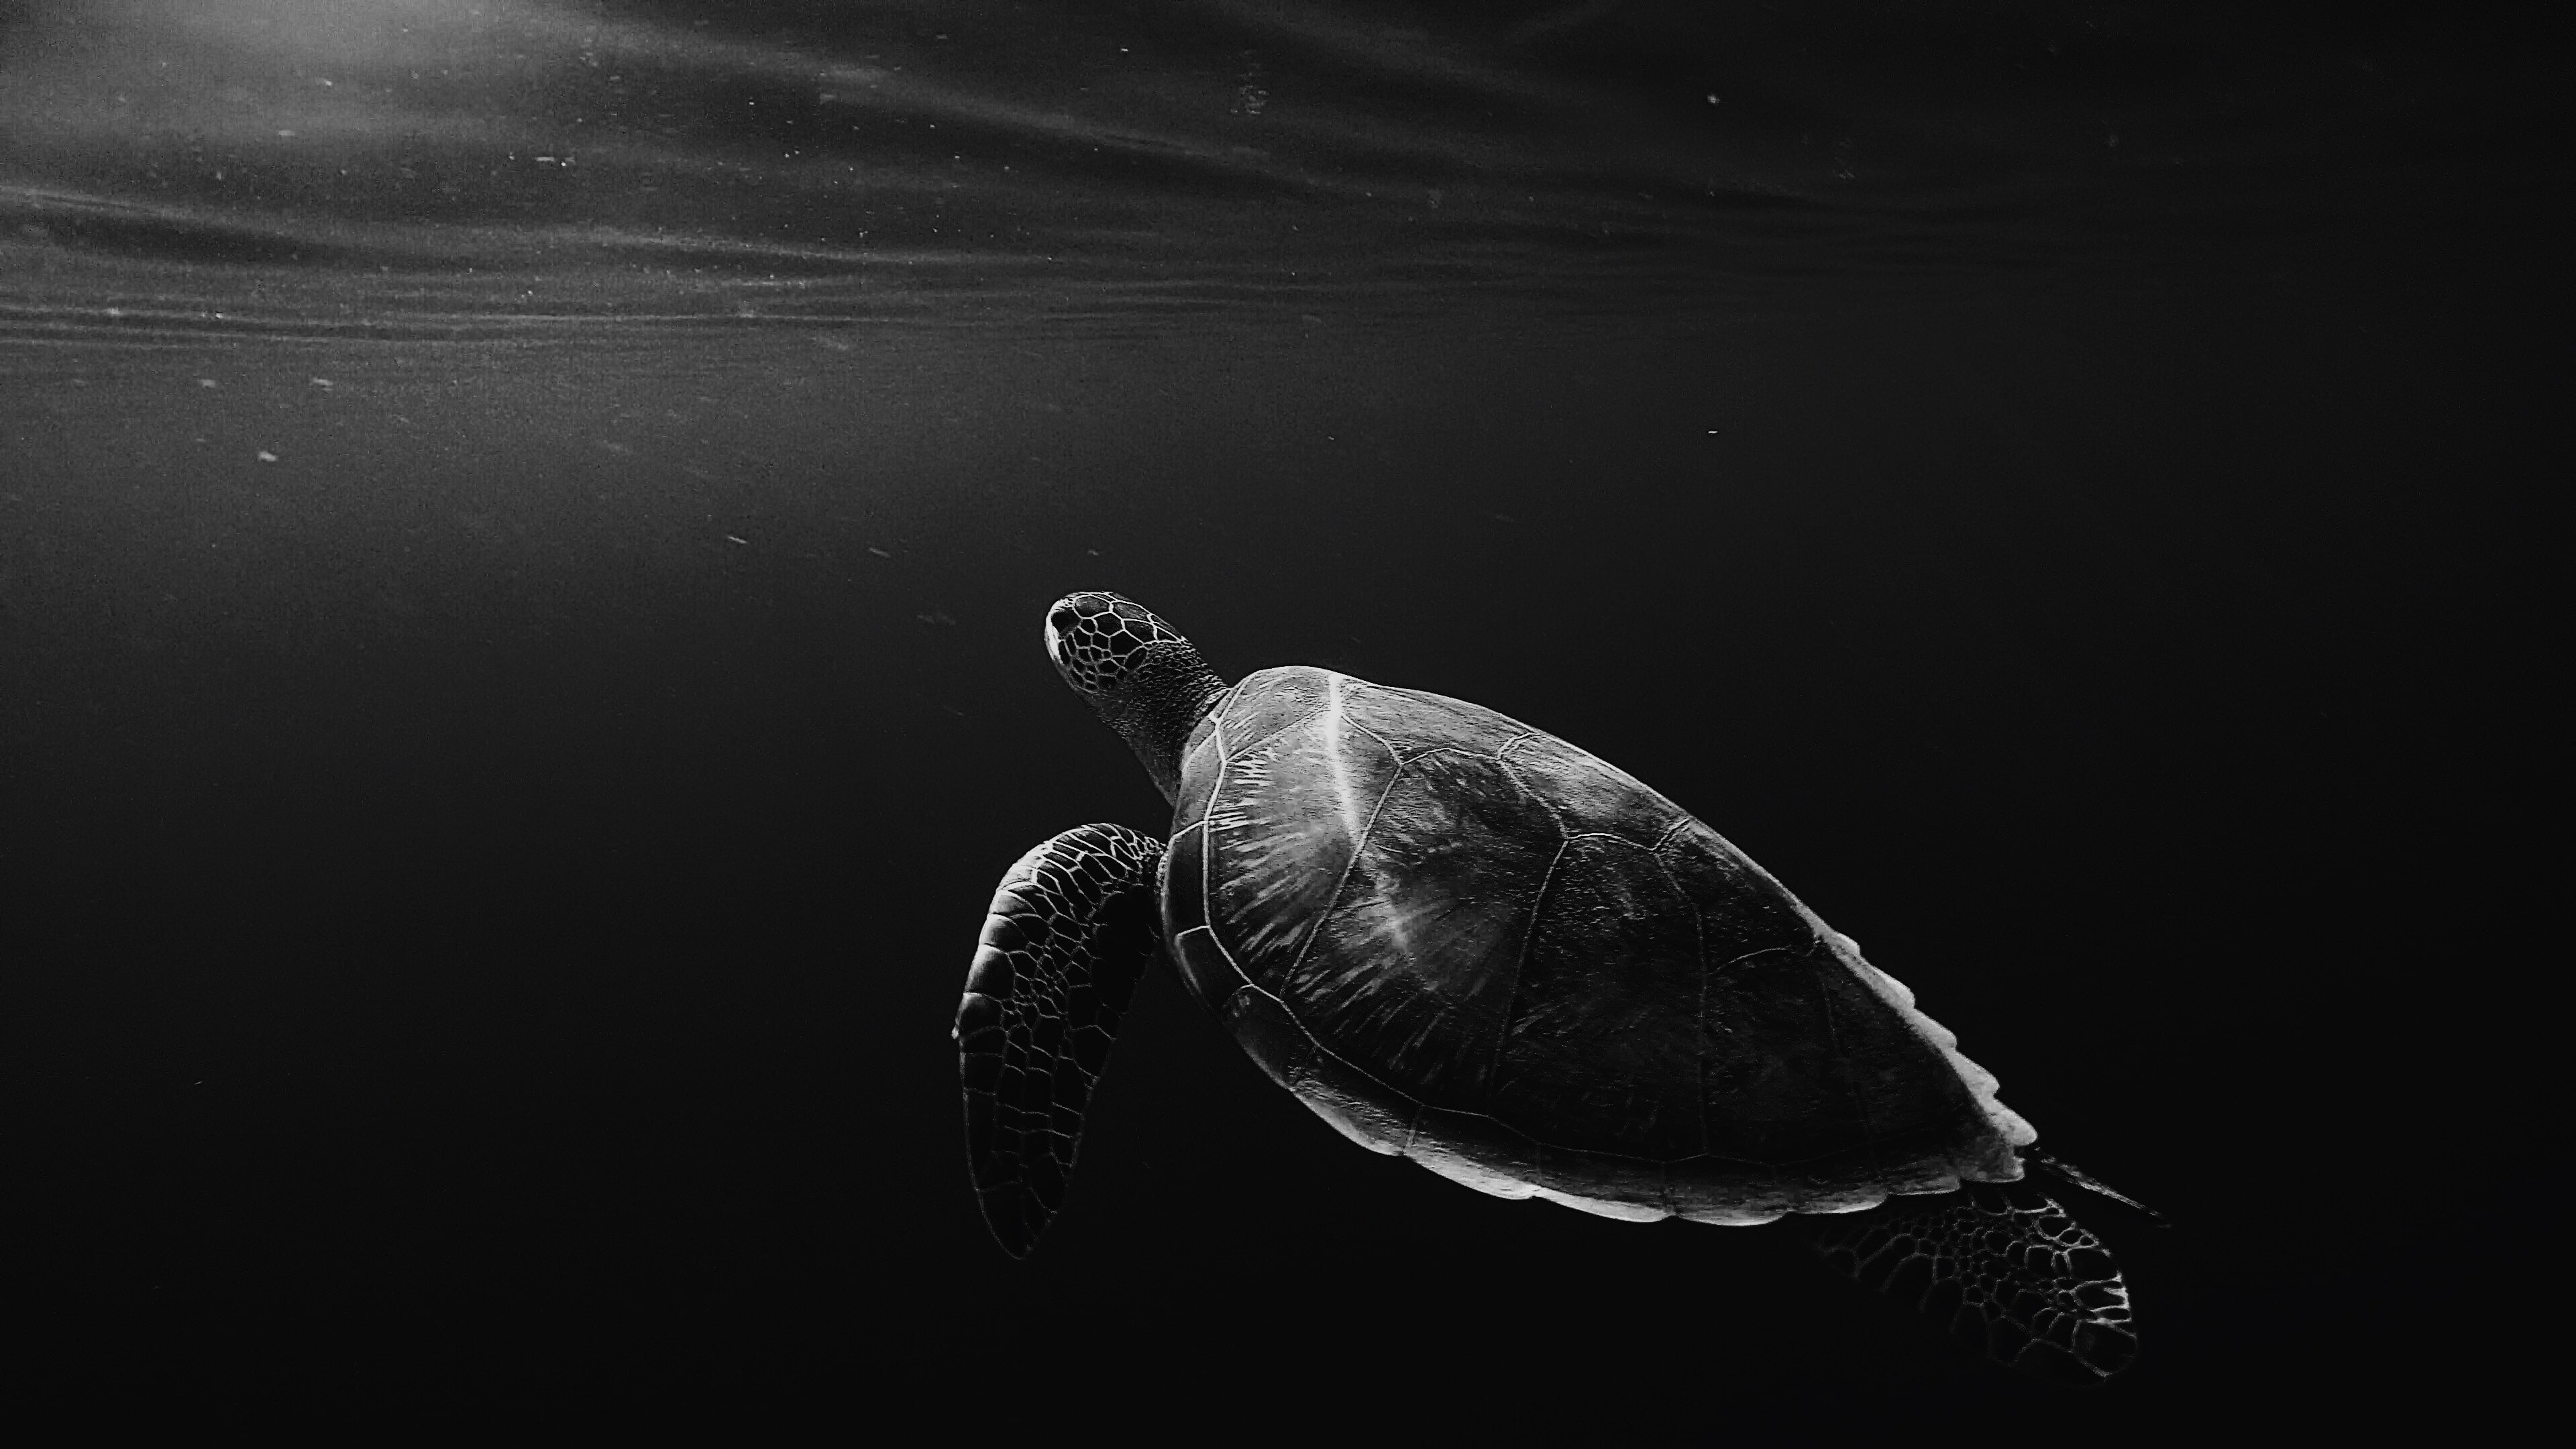 Turtle Underwater Monochrome 4K, animal wildlife, animal themes